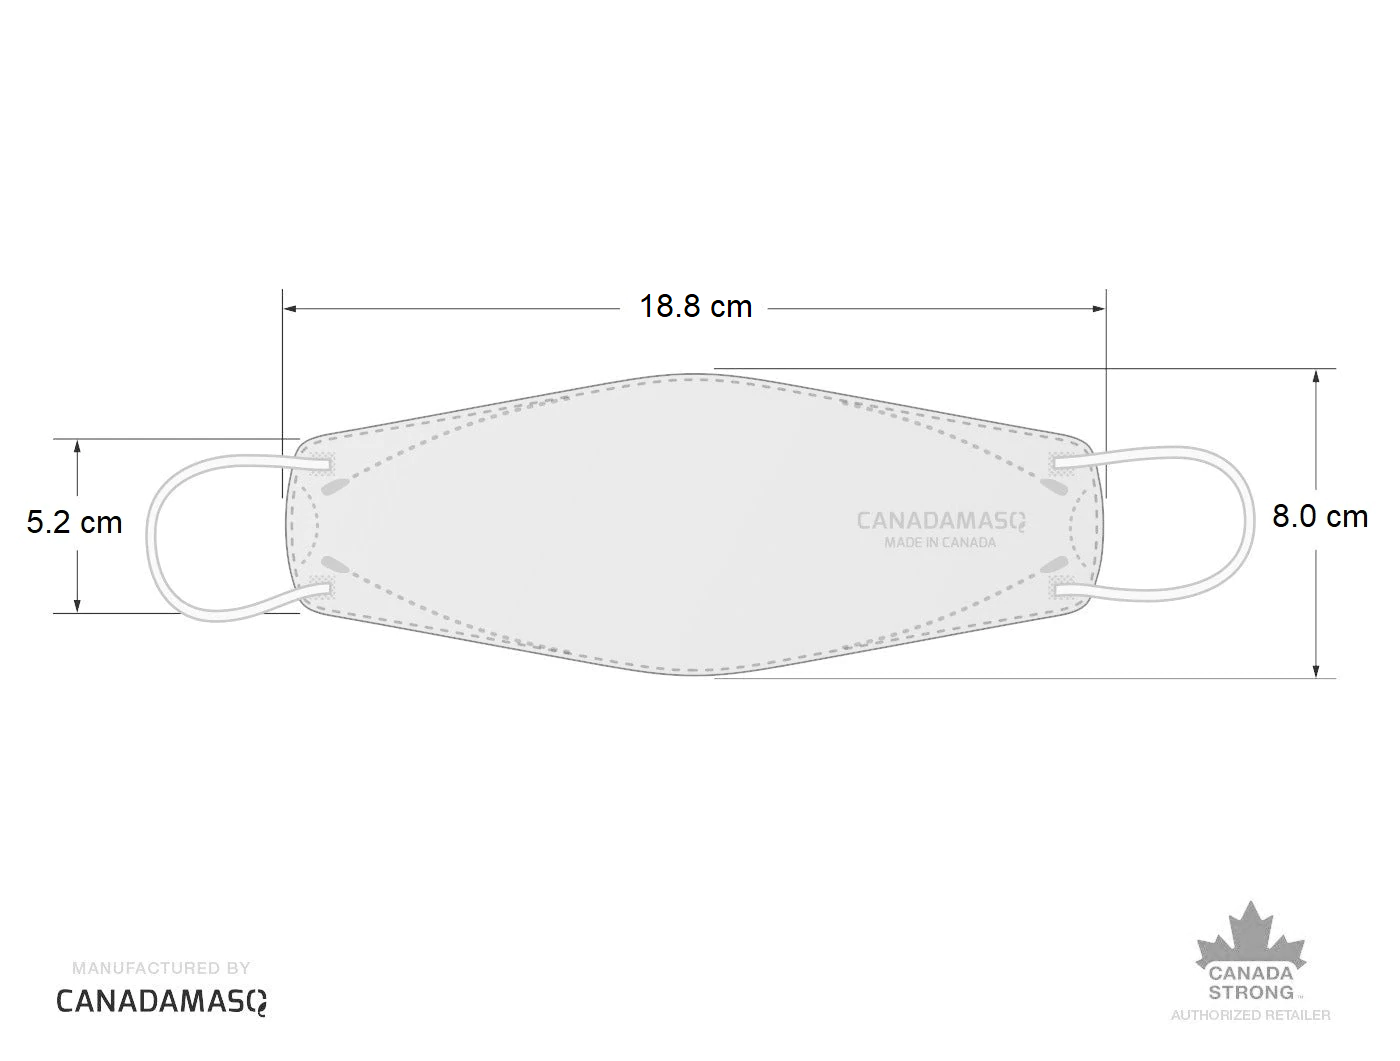 Canada Masq CA-N95 Small White mask dimensions